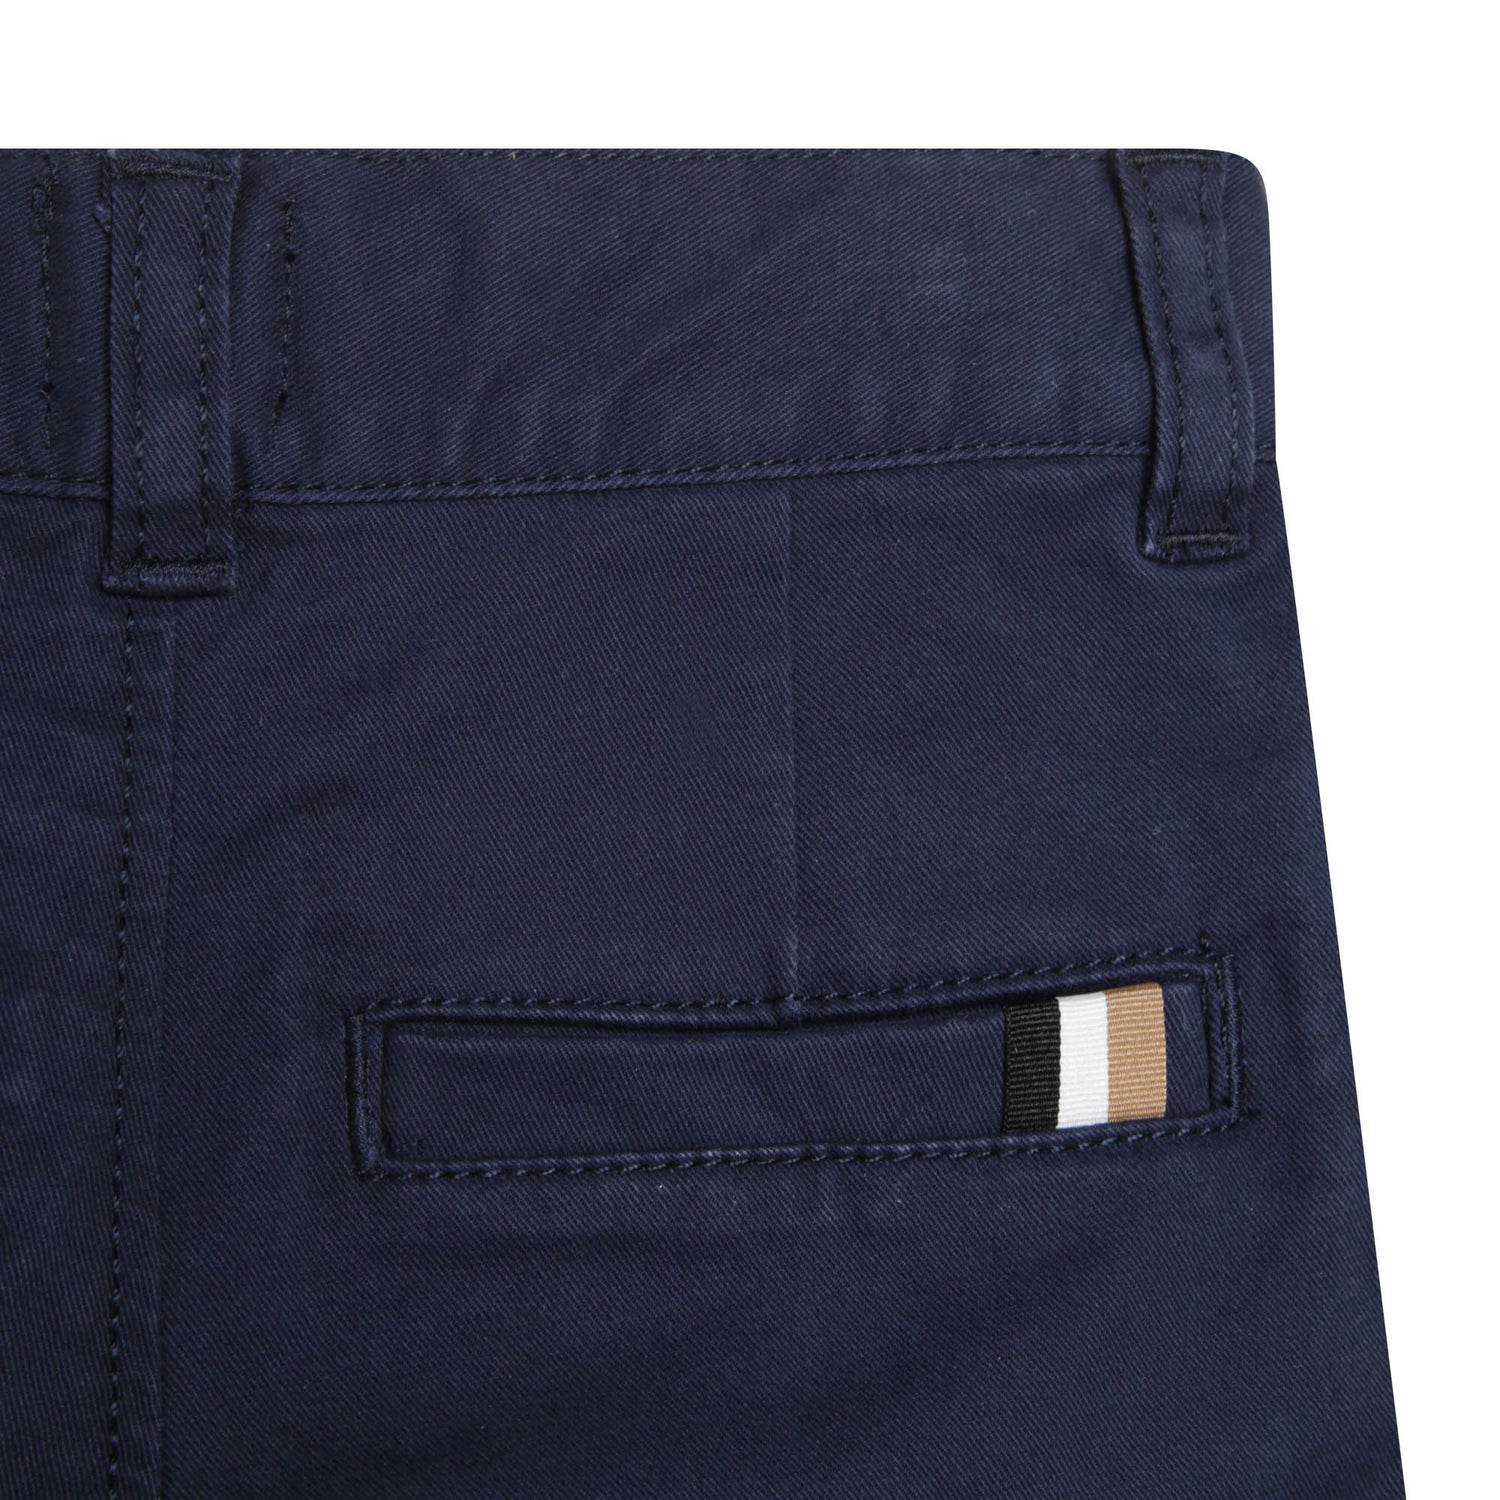 Boss Trousers Style: J24792